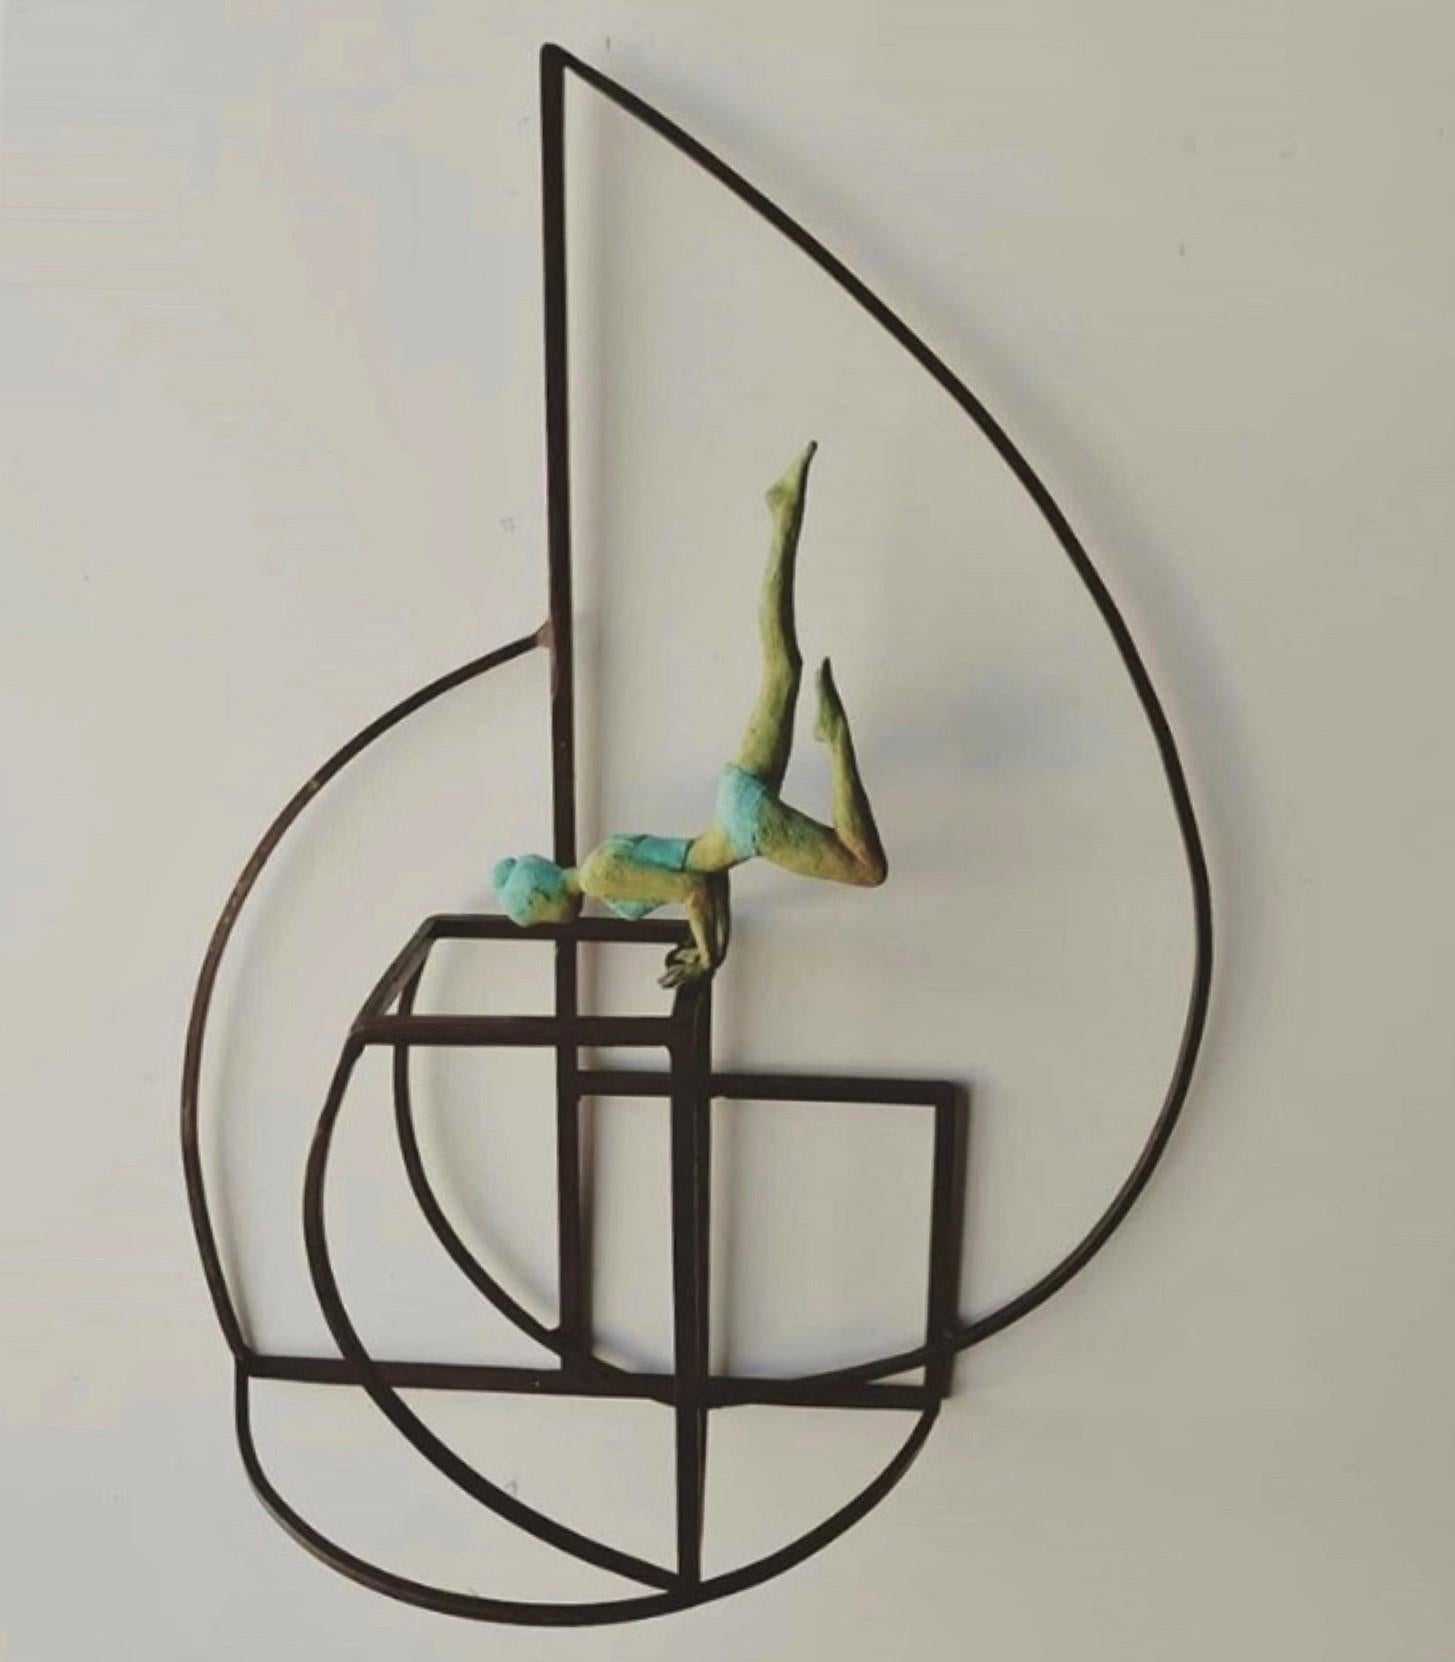 Joan Artigas Planas Figurative Sculpture - "In the Shell" contemporary bronze table, mural sculpture figurative girl yoga